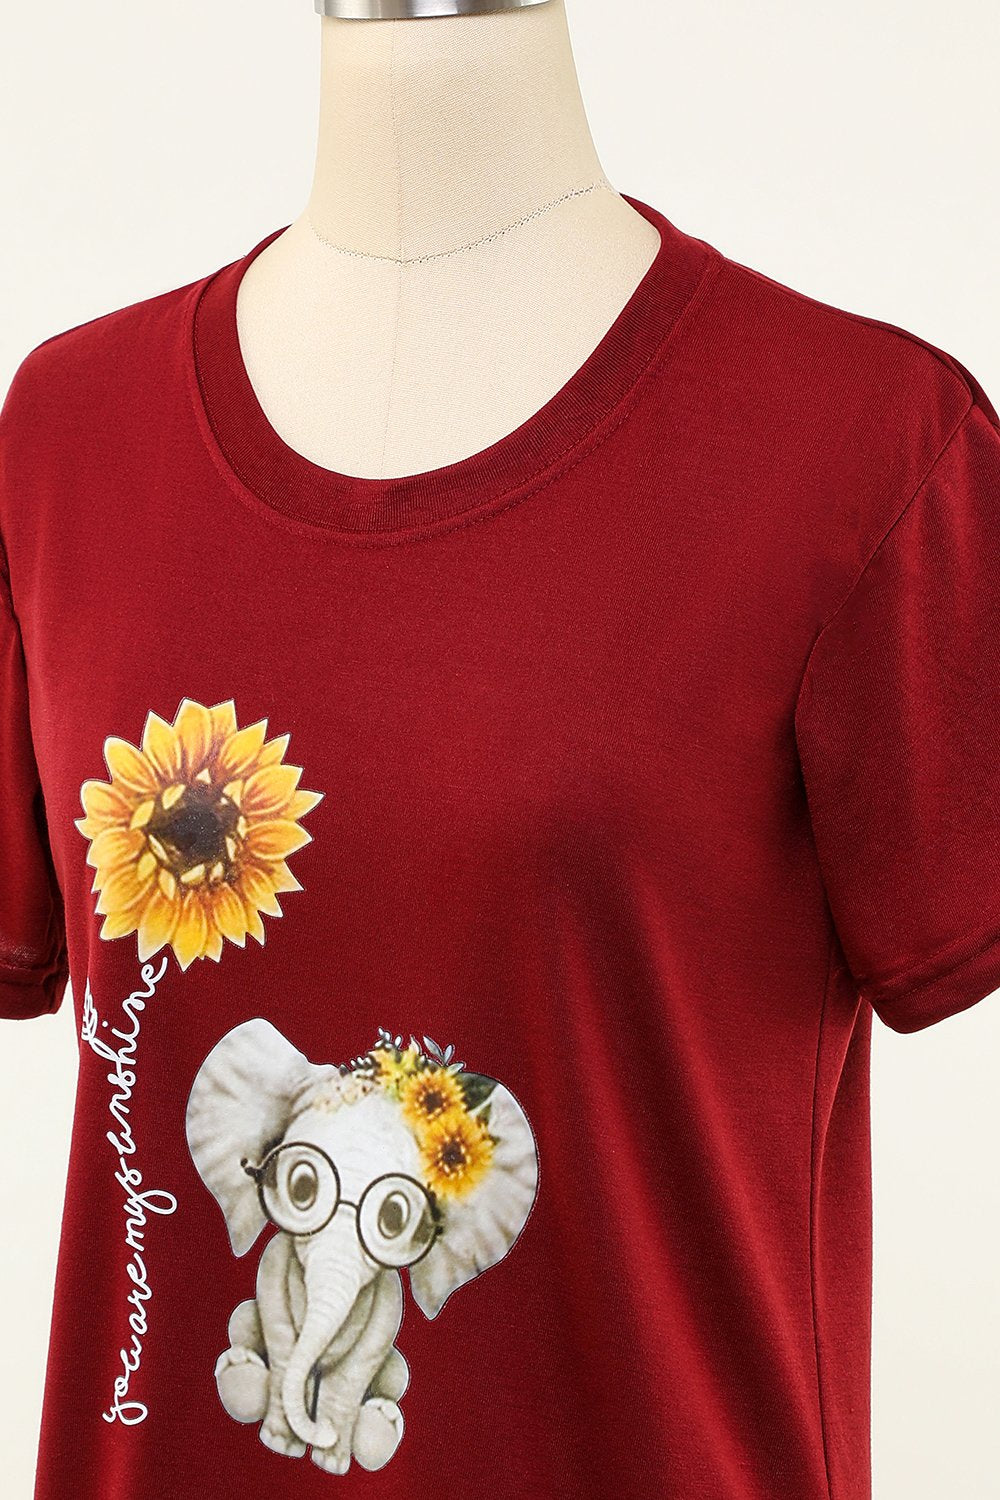 Elephant Sunflower Printed T-Shirt